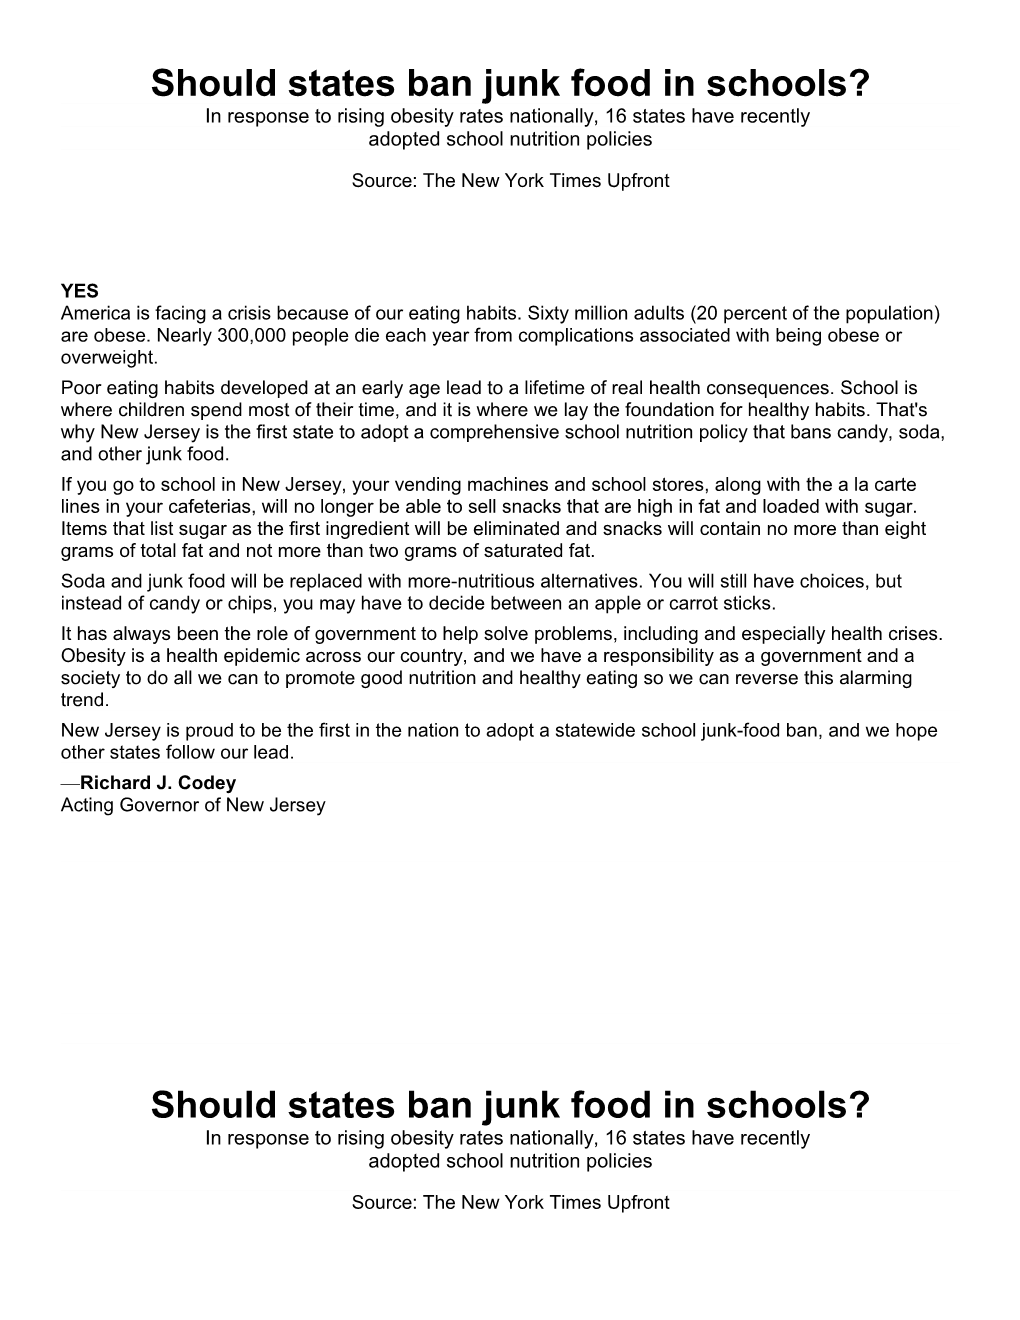 Should States Ban Junk Food in Schools?